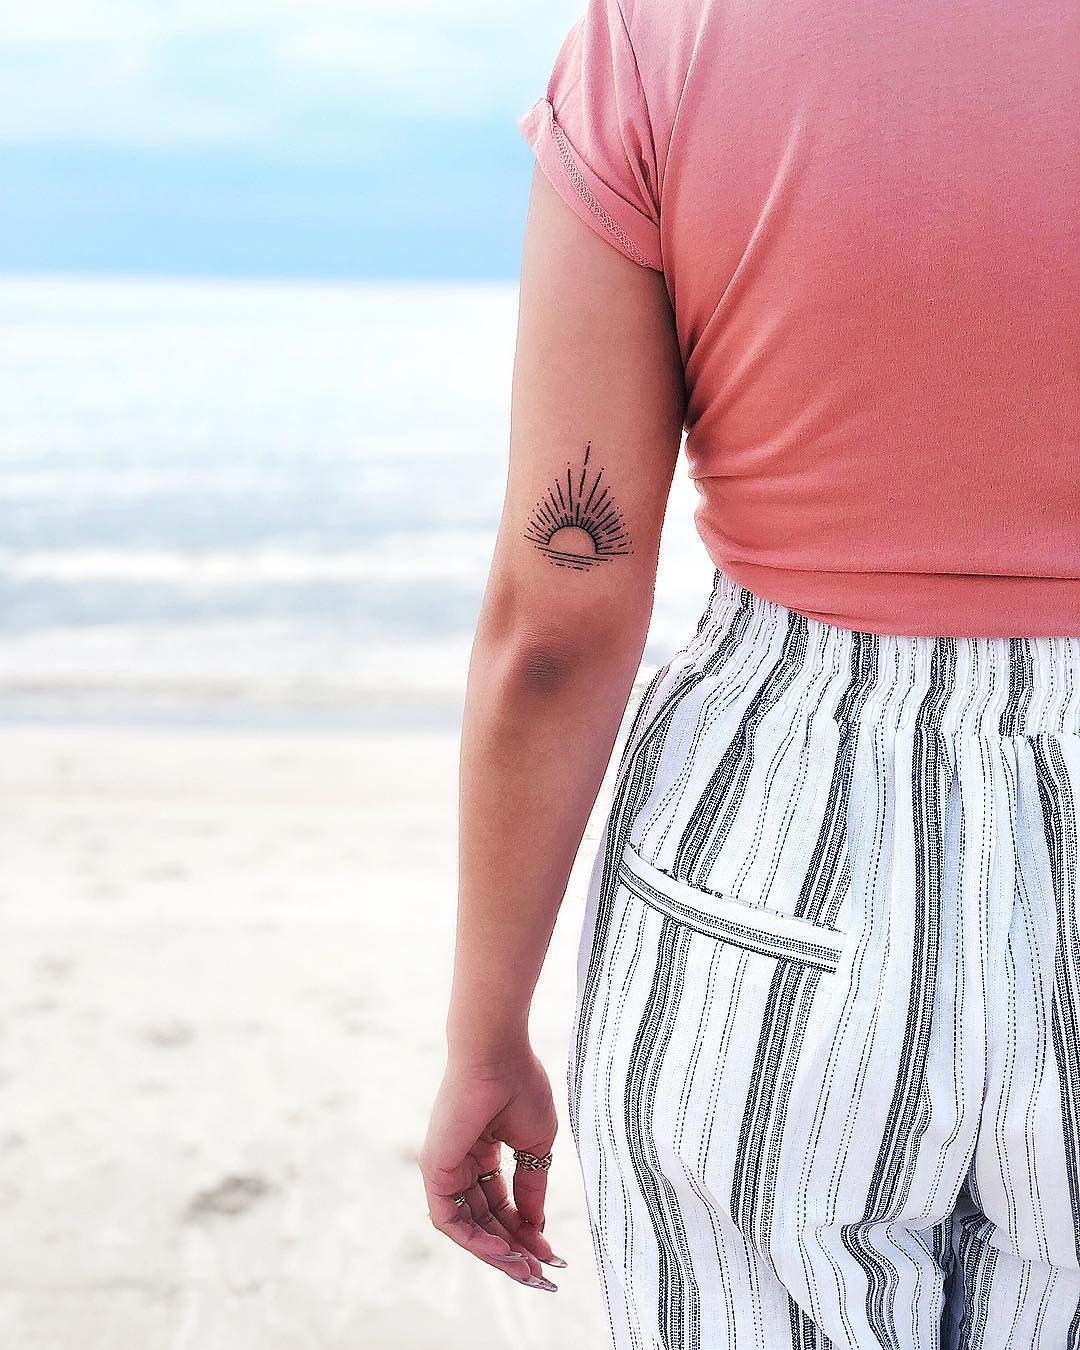 Meaningful Small Stoner Tattoos